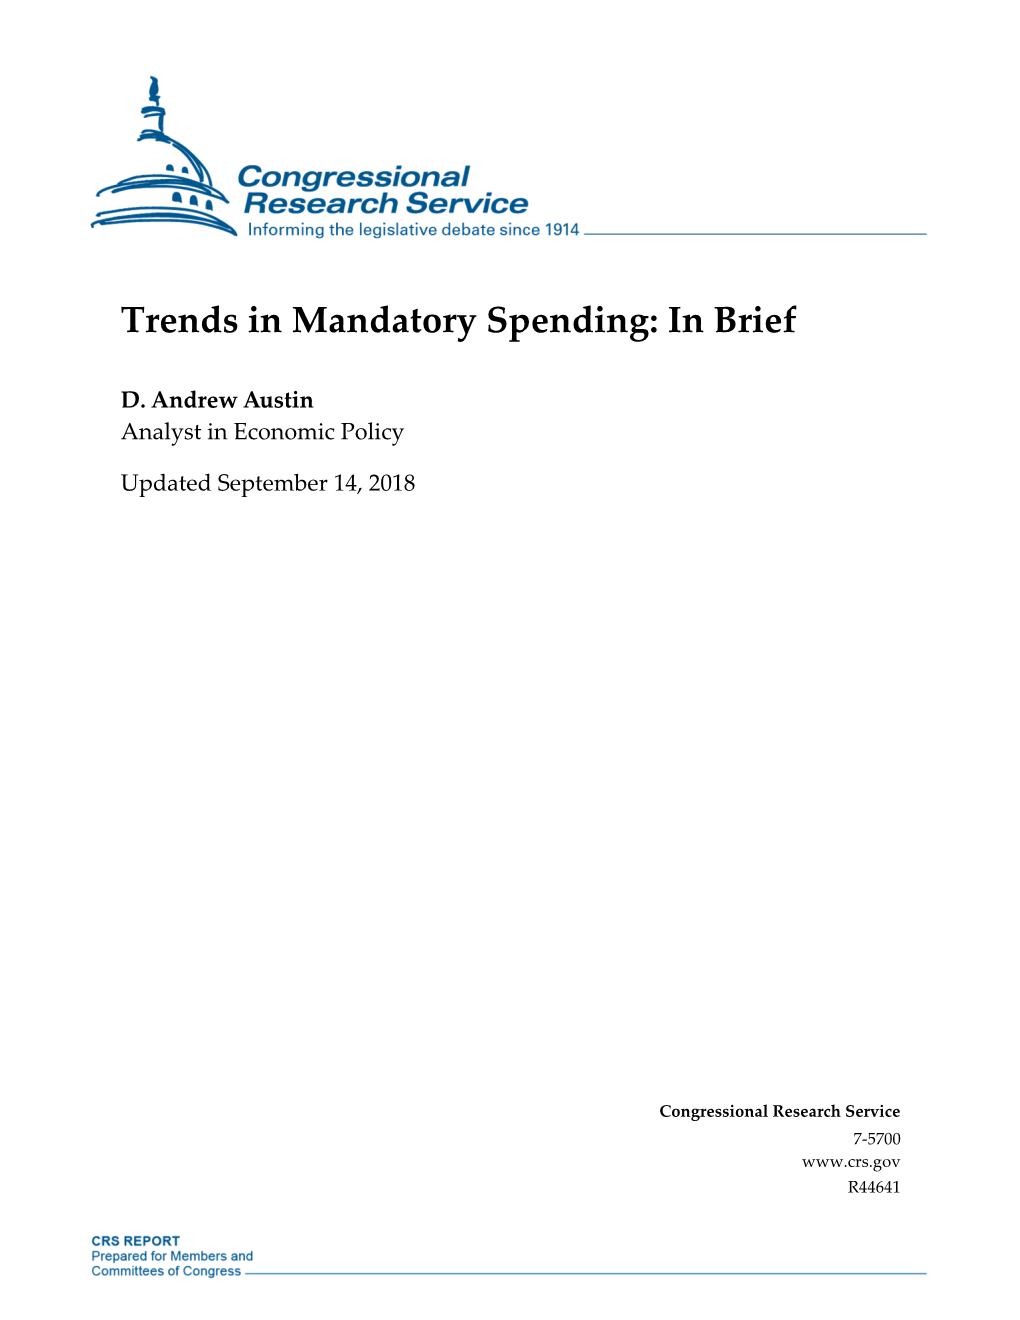 Mandatory Spending: in Brief